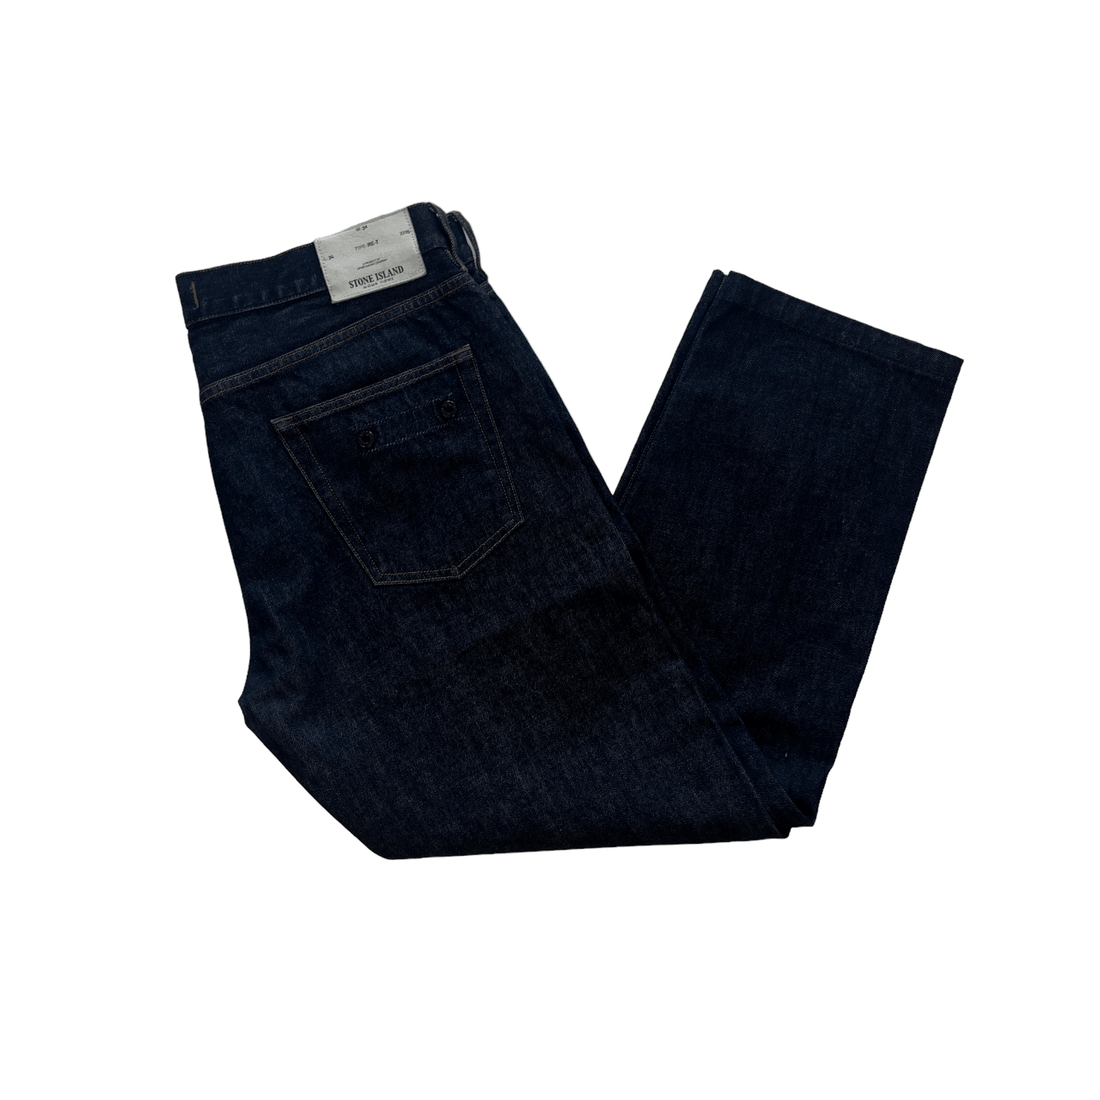 Vintage Dark Blue Stone Island Jeans - W 34” - The Streetwear Studio